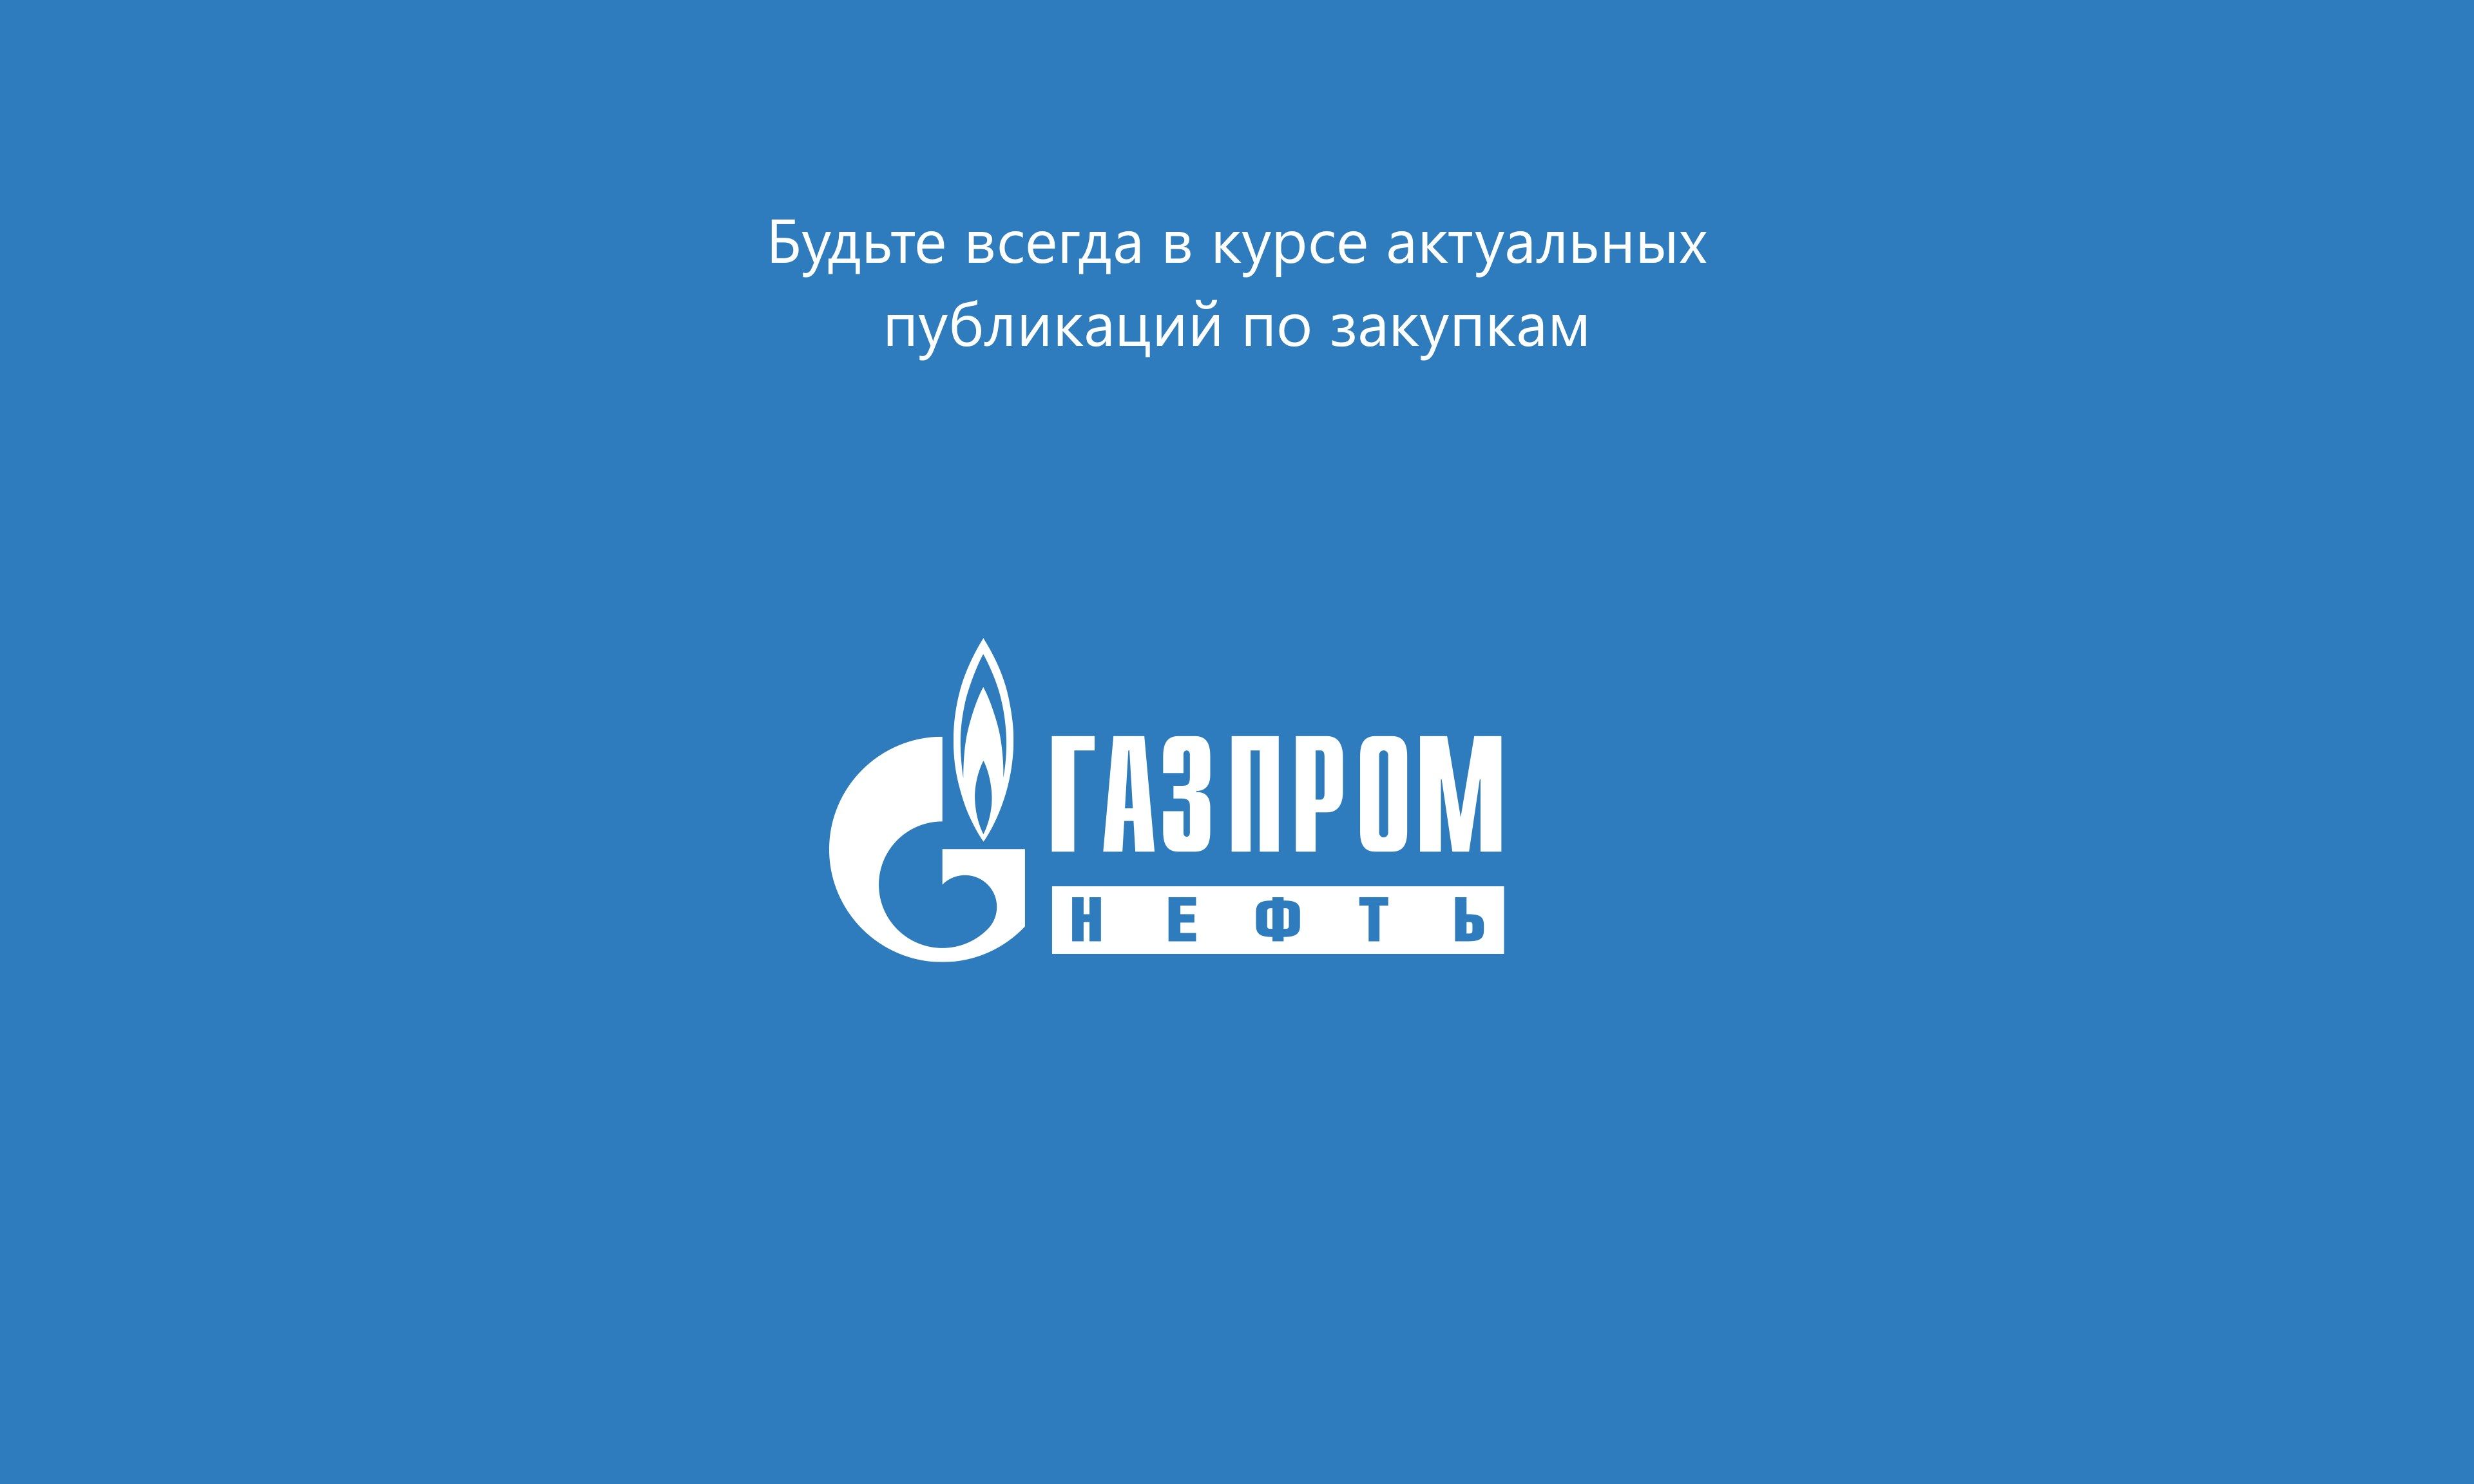 The tenders of "Gazprom neft"